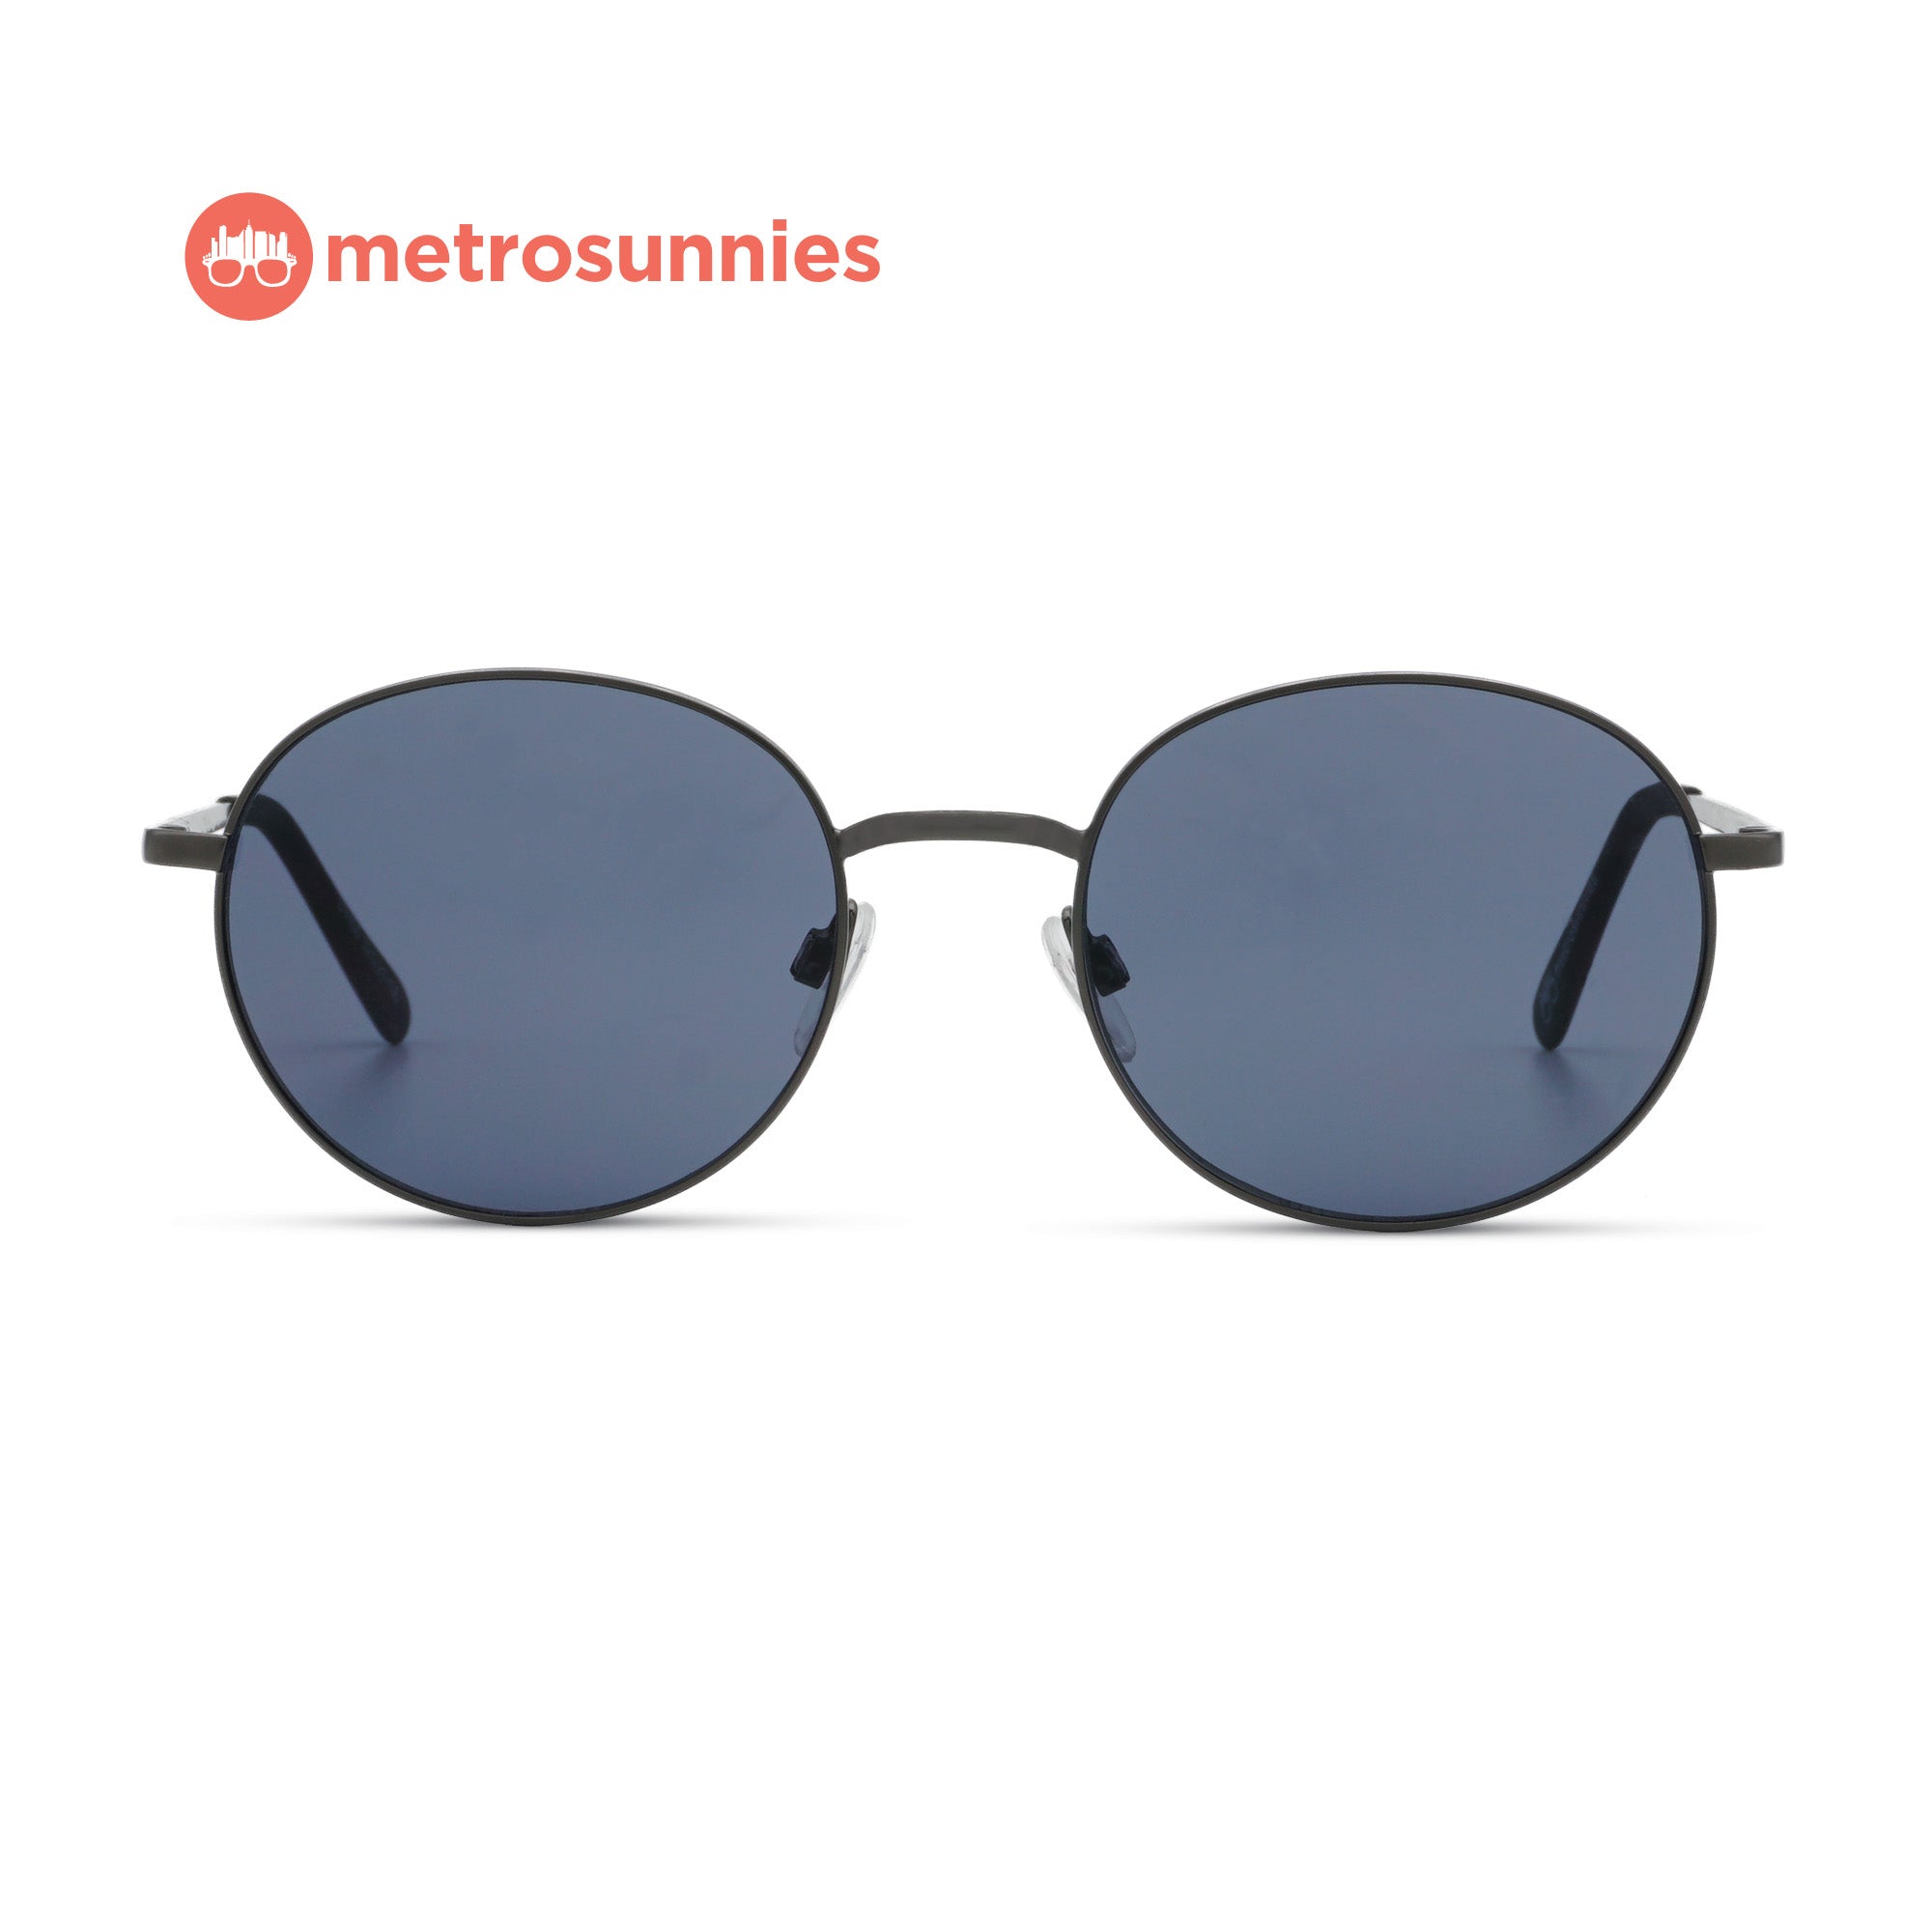 MetroSunnies Riki Sunnies (Black) / Sunglasses with UV400 Protection / Fashion Eyewear Unisex